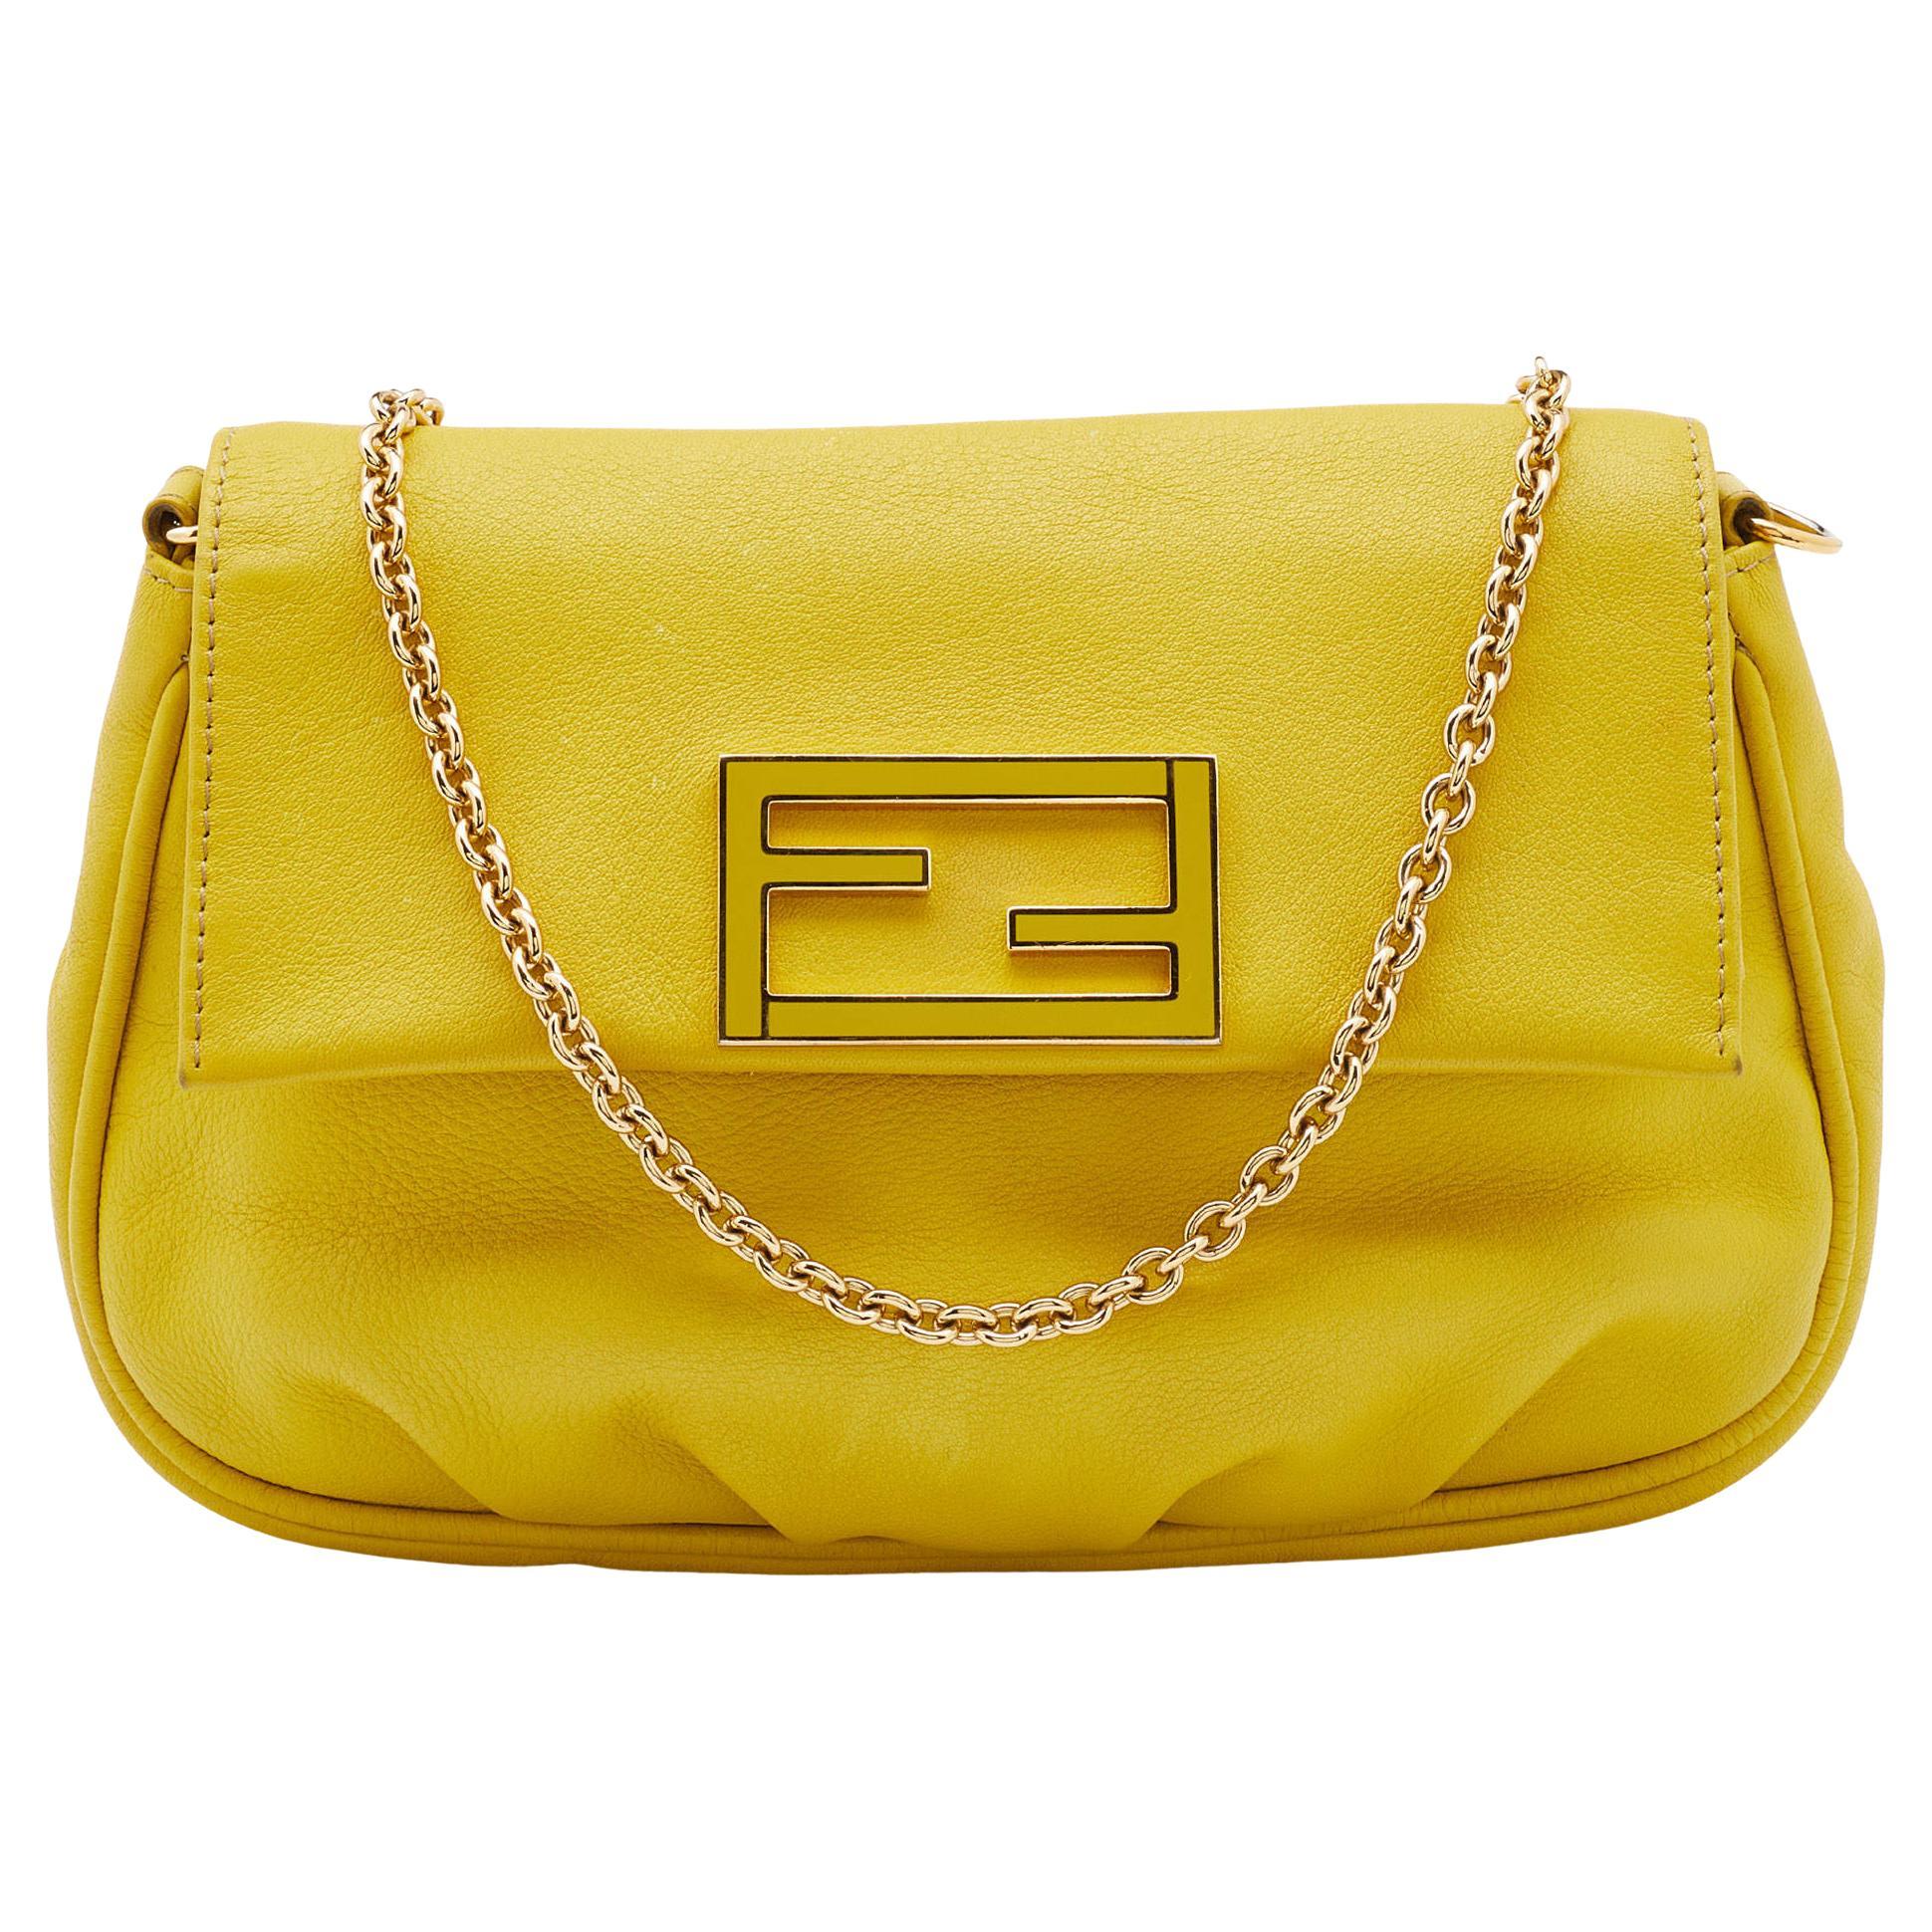 Fendi Yellow Leather Fendista Pochette Crossbody Bag